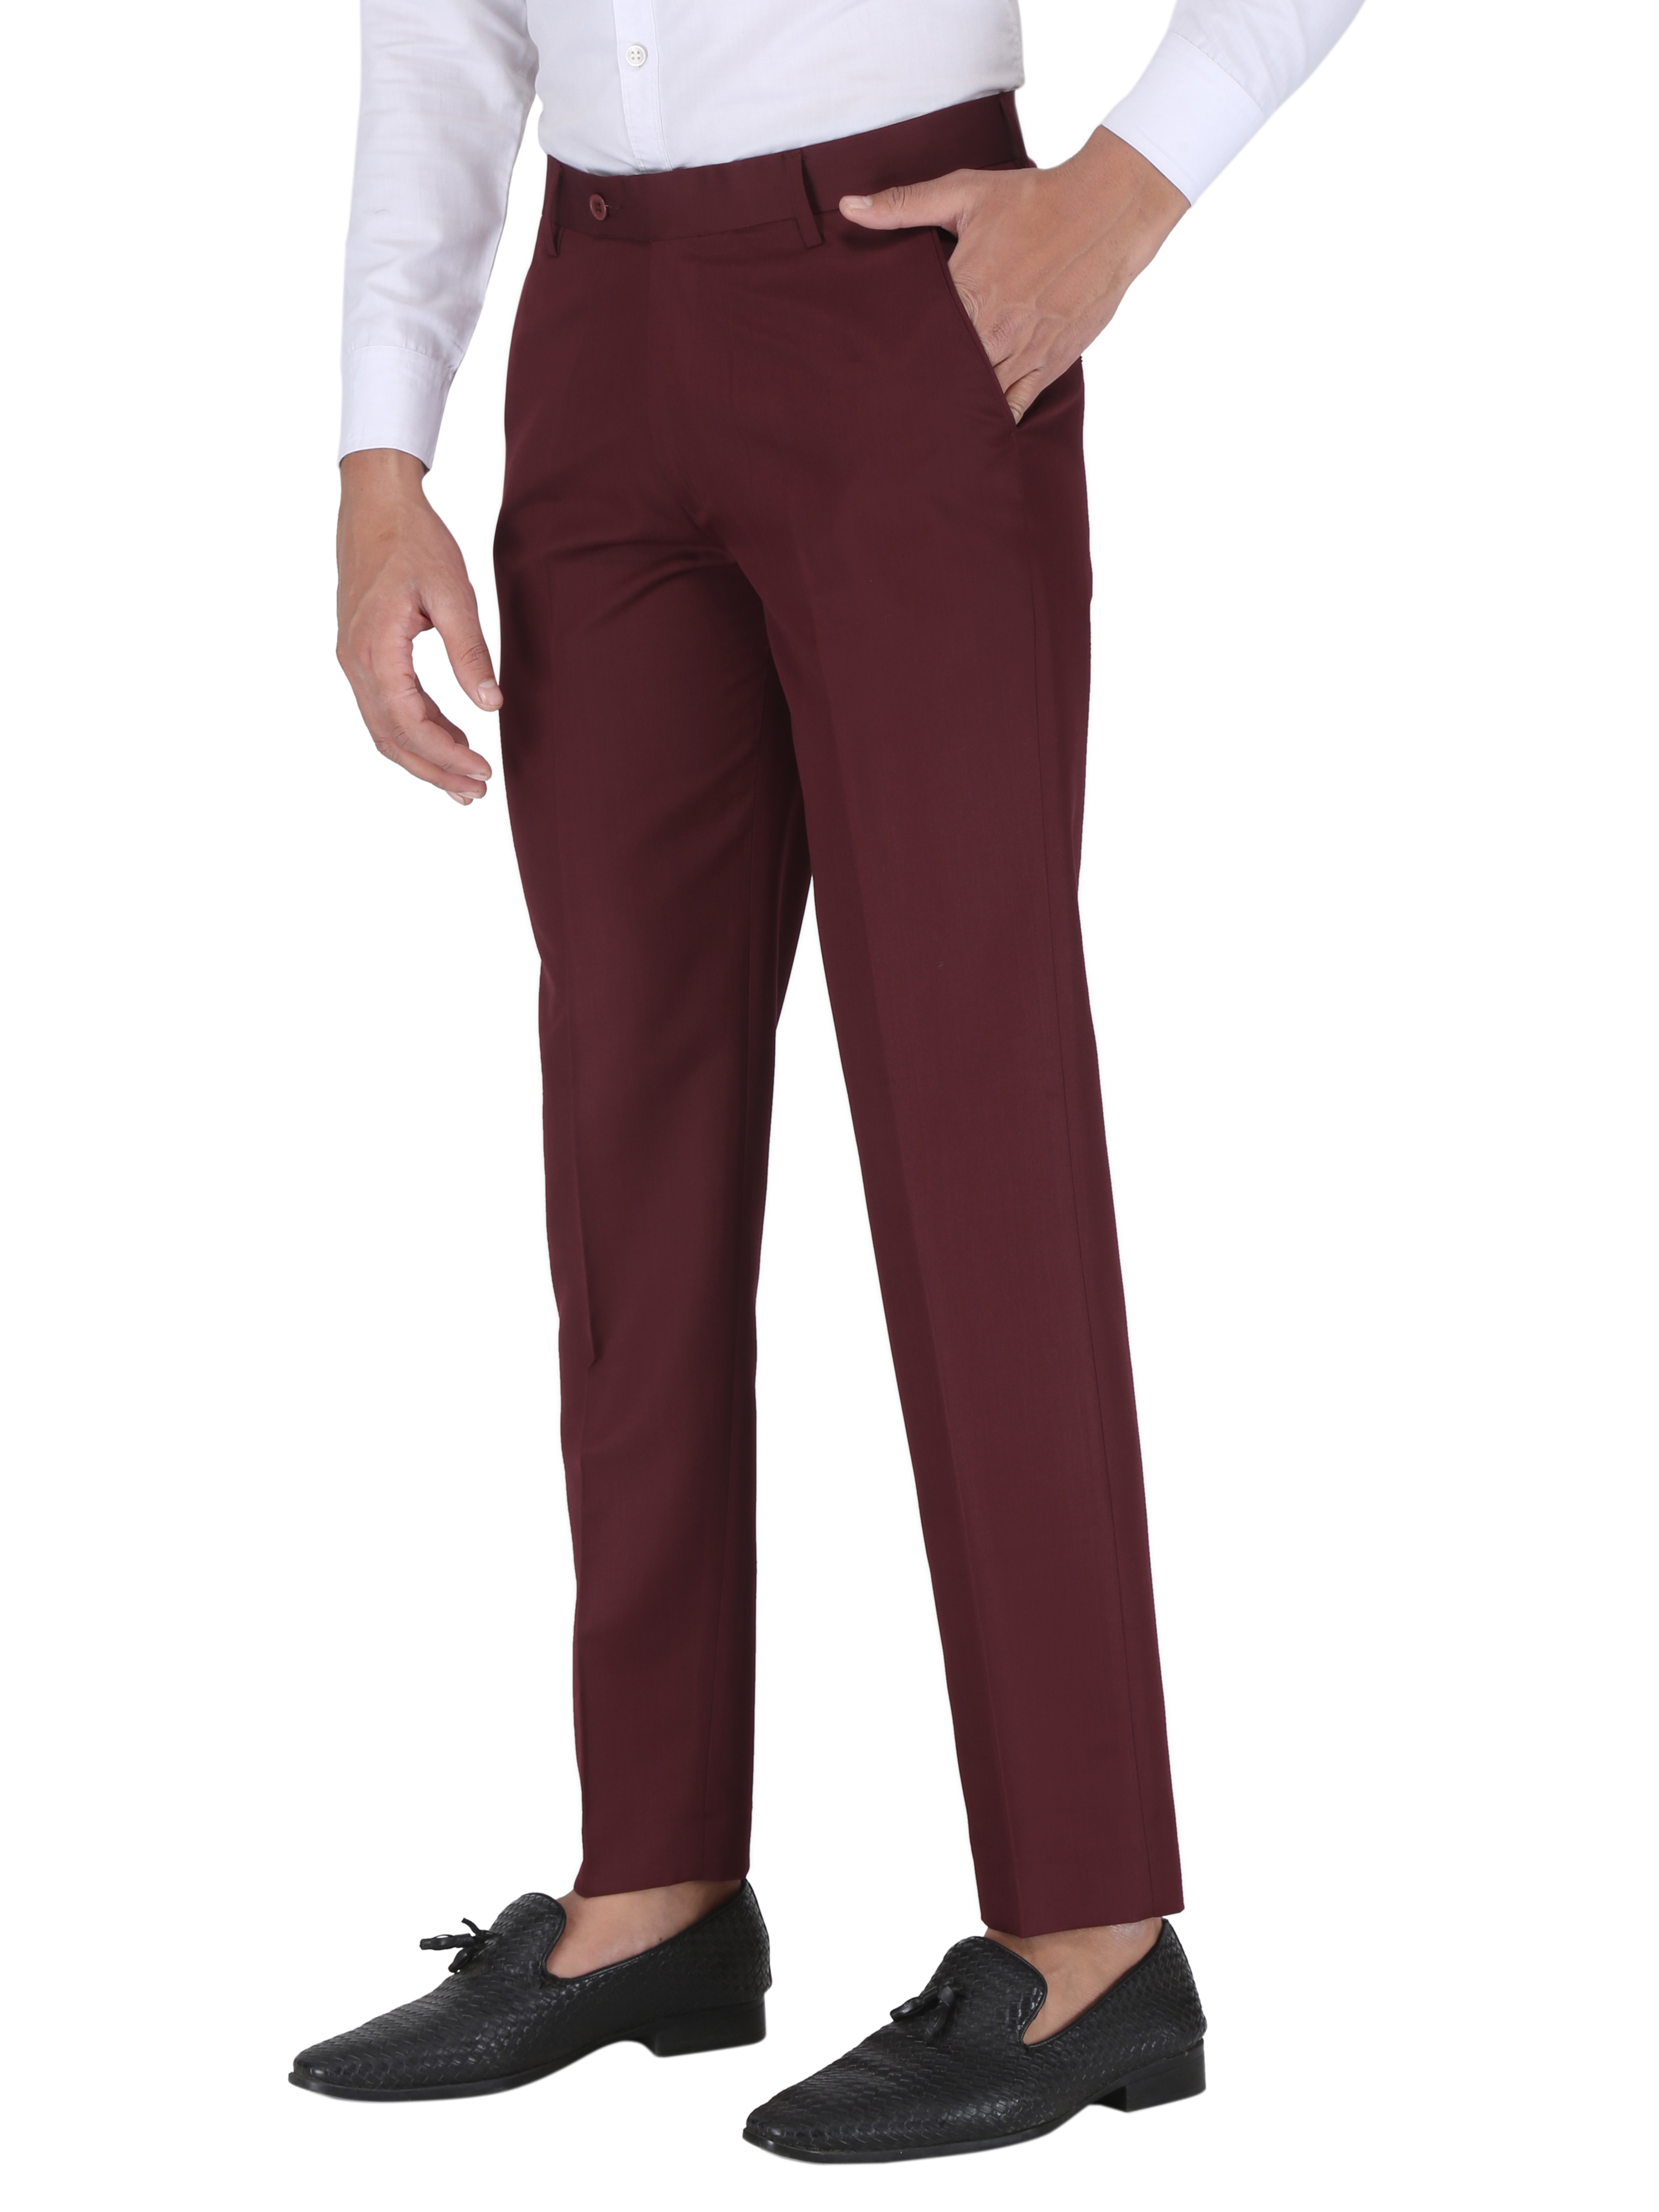 CHARLIE CARLOS | Maroon Men's Contemporary Reguler Leg Business Pants in Virgin PolyViscose Regular Fit Formal Trousers/Pants